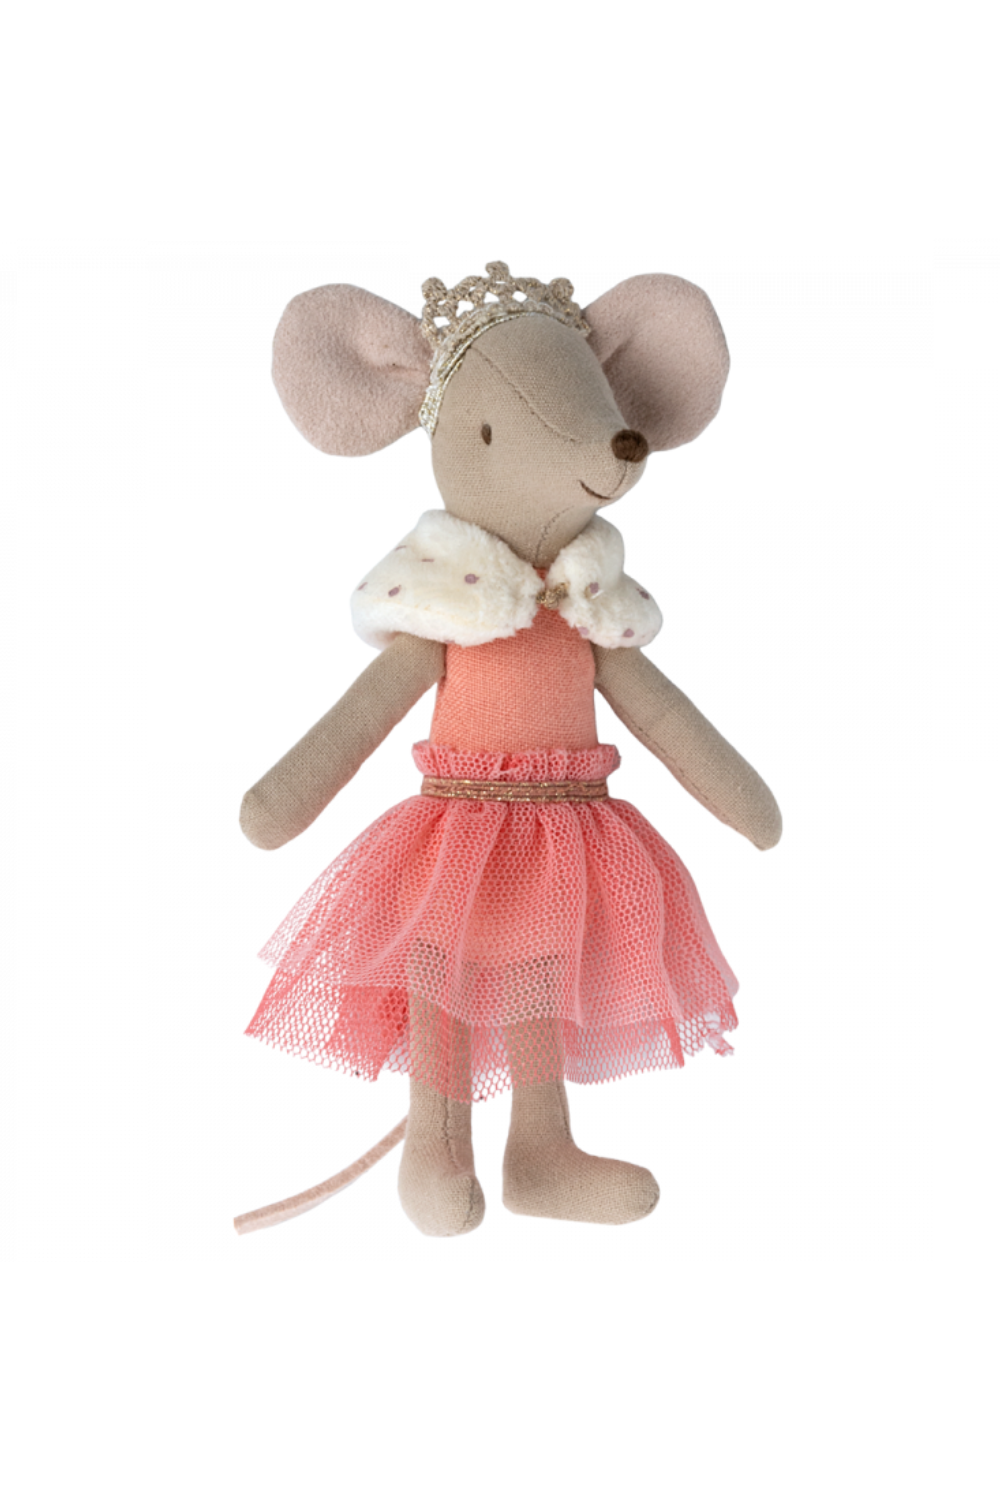 Maileg Princess Mouse, Big Sister - Coral (new version)